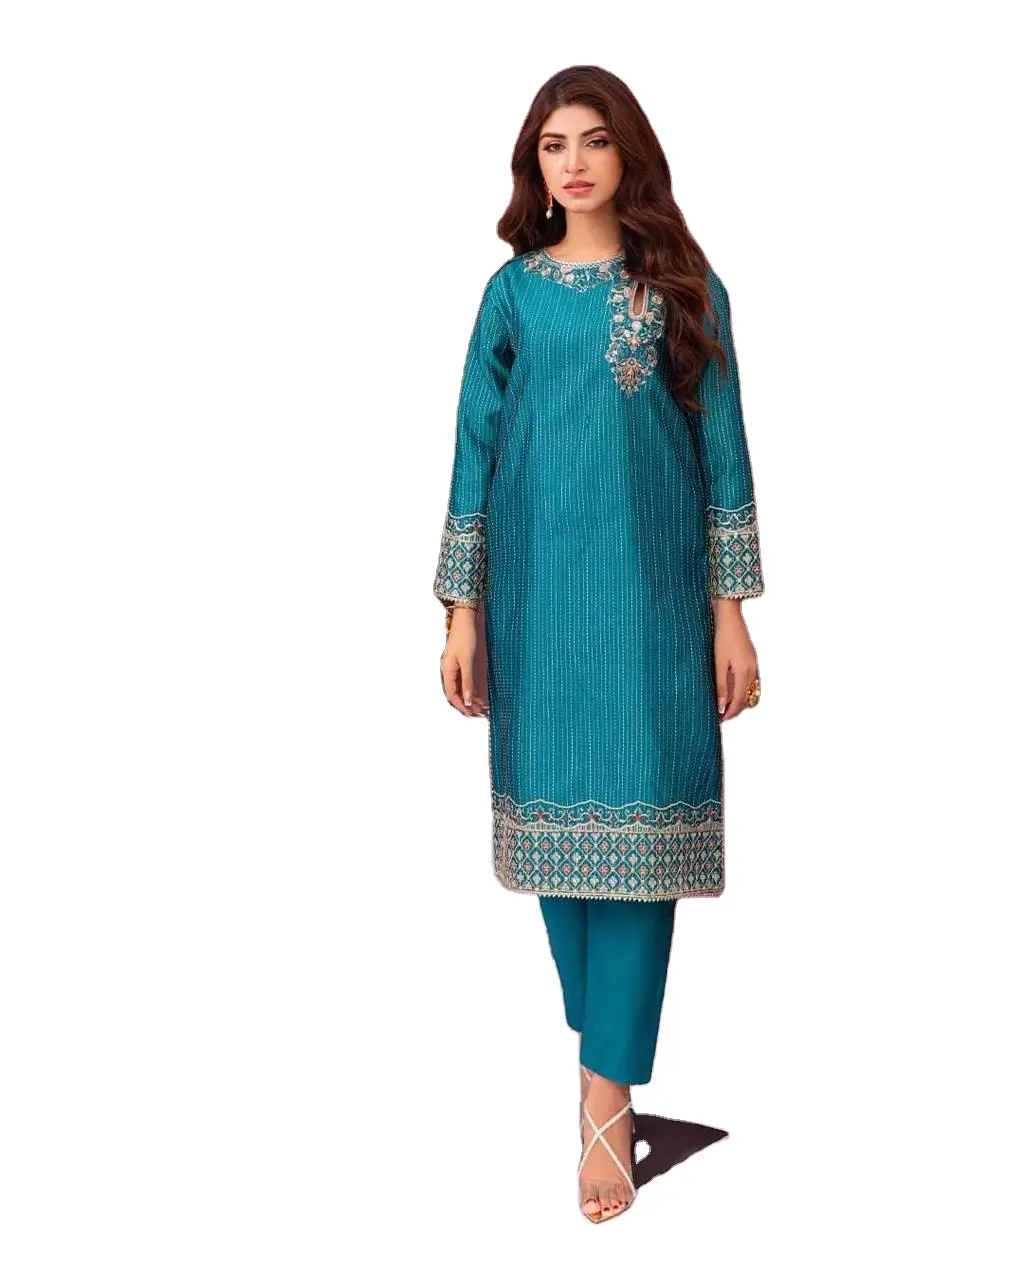 Vestido casual bonito para mulheres muçulmanas tamanho personalizado com estampa bordada, vestido paquistanês para mulheres WS INTERNACIONAL